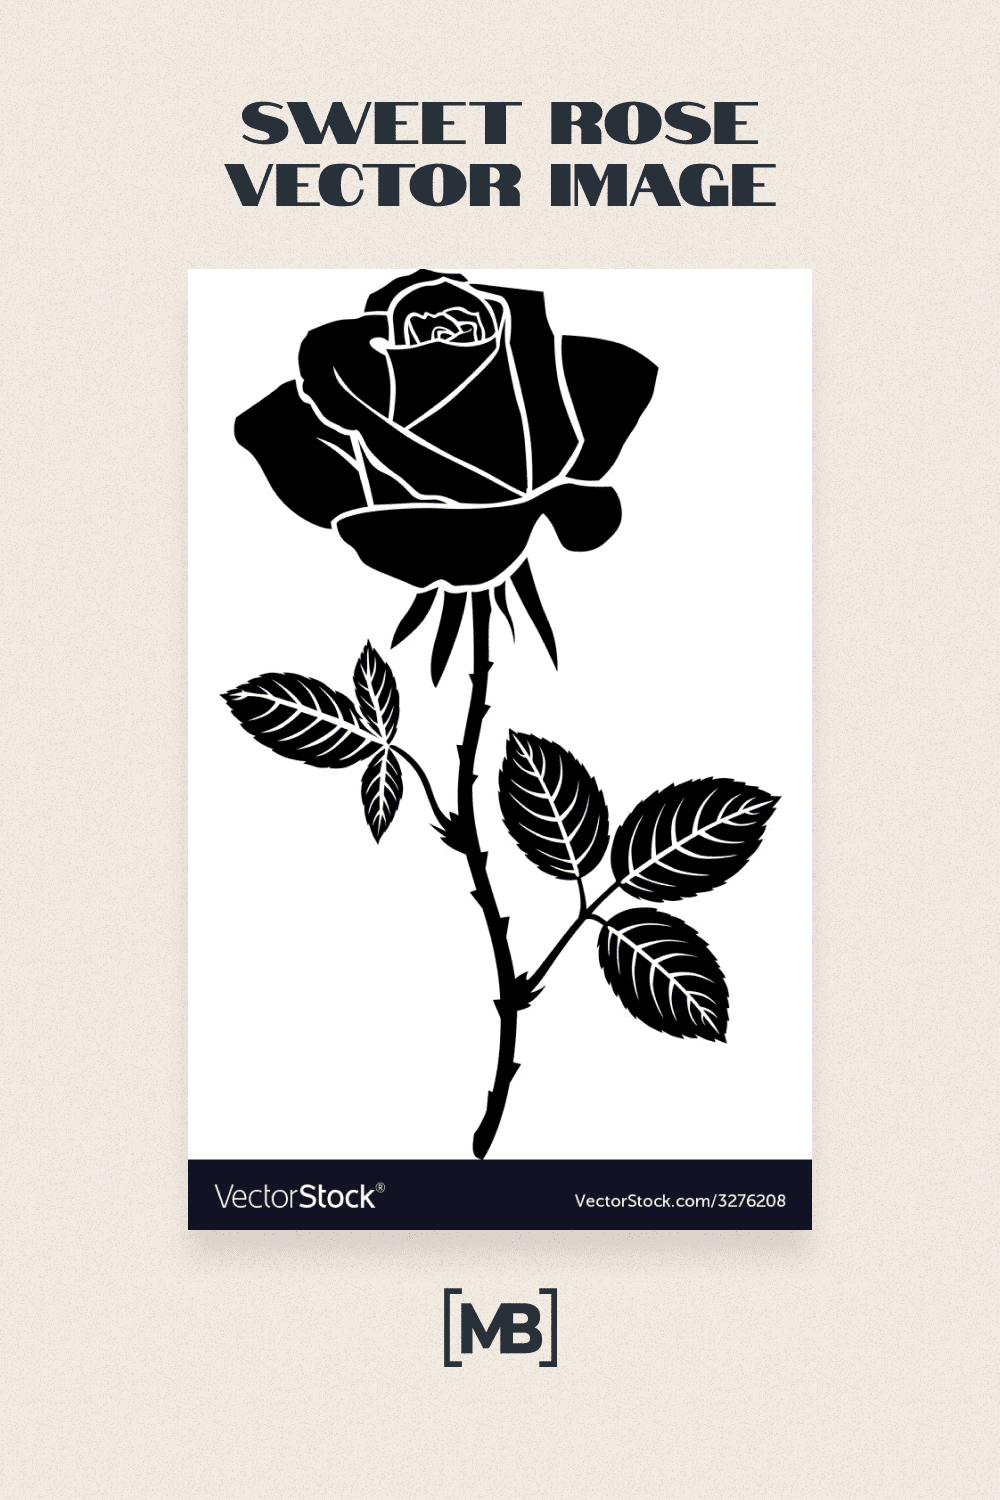 Sweet rose vector image.